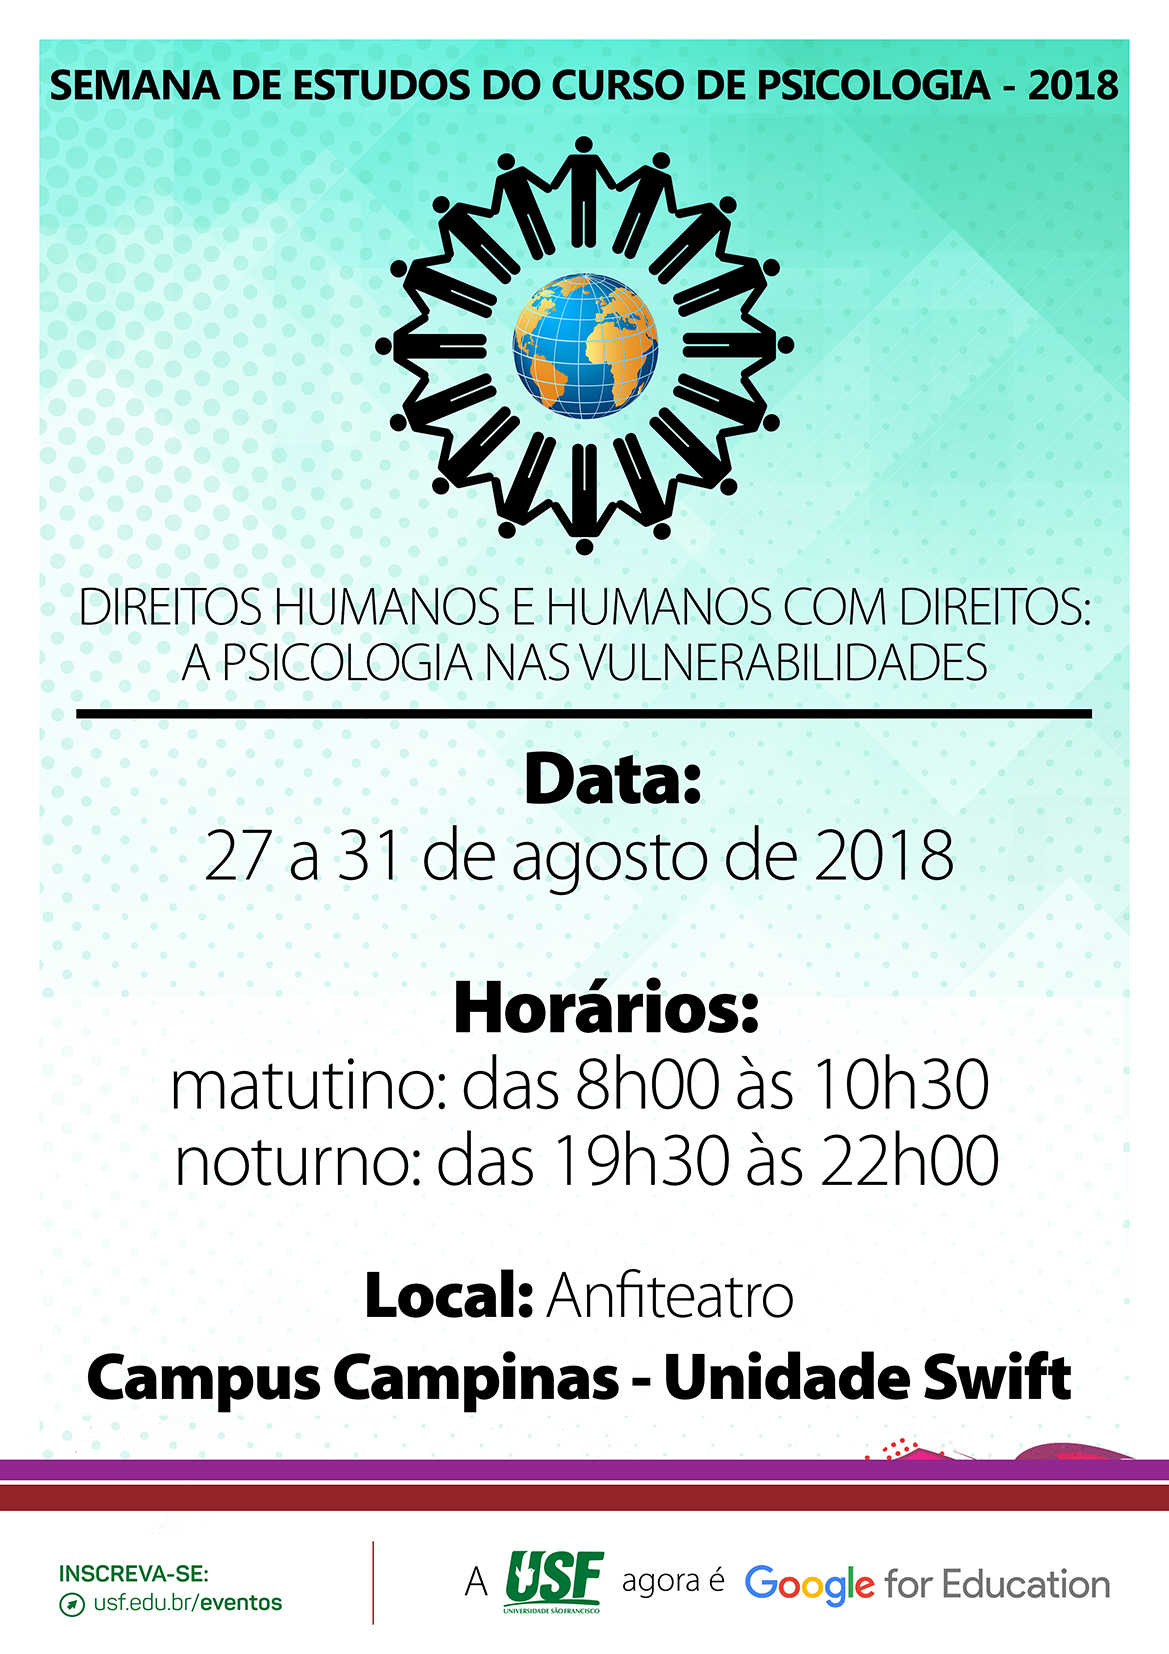 Semana de Estudos do Curso de Psicologia 2018 - Campus Campinas 